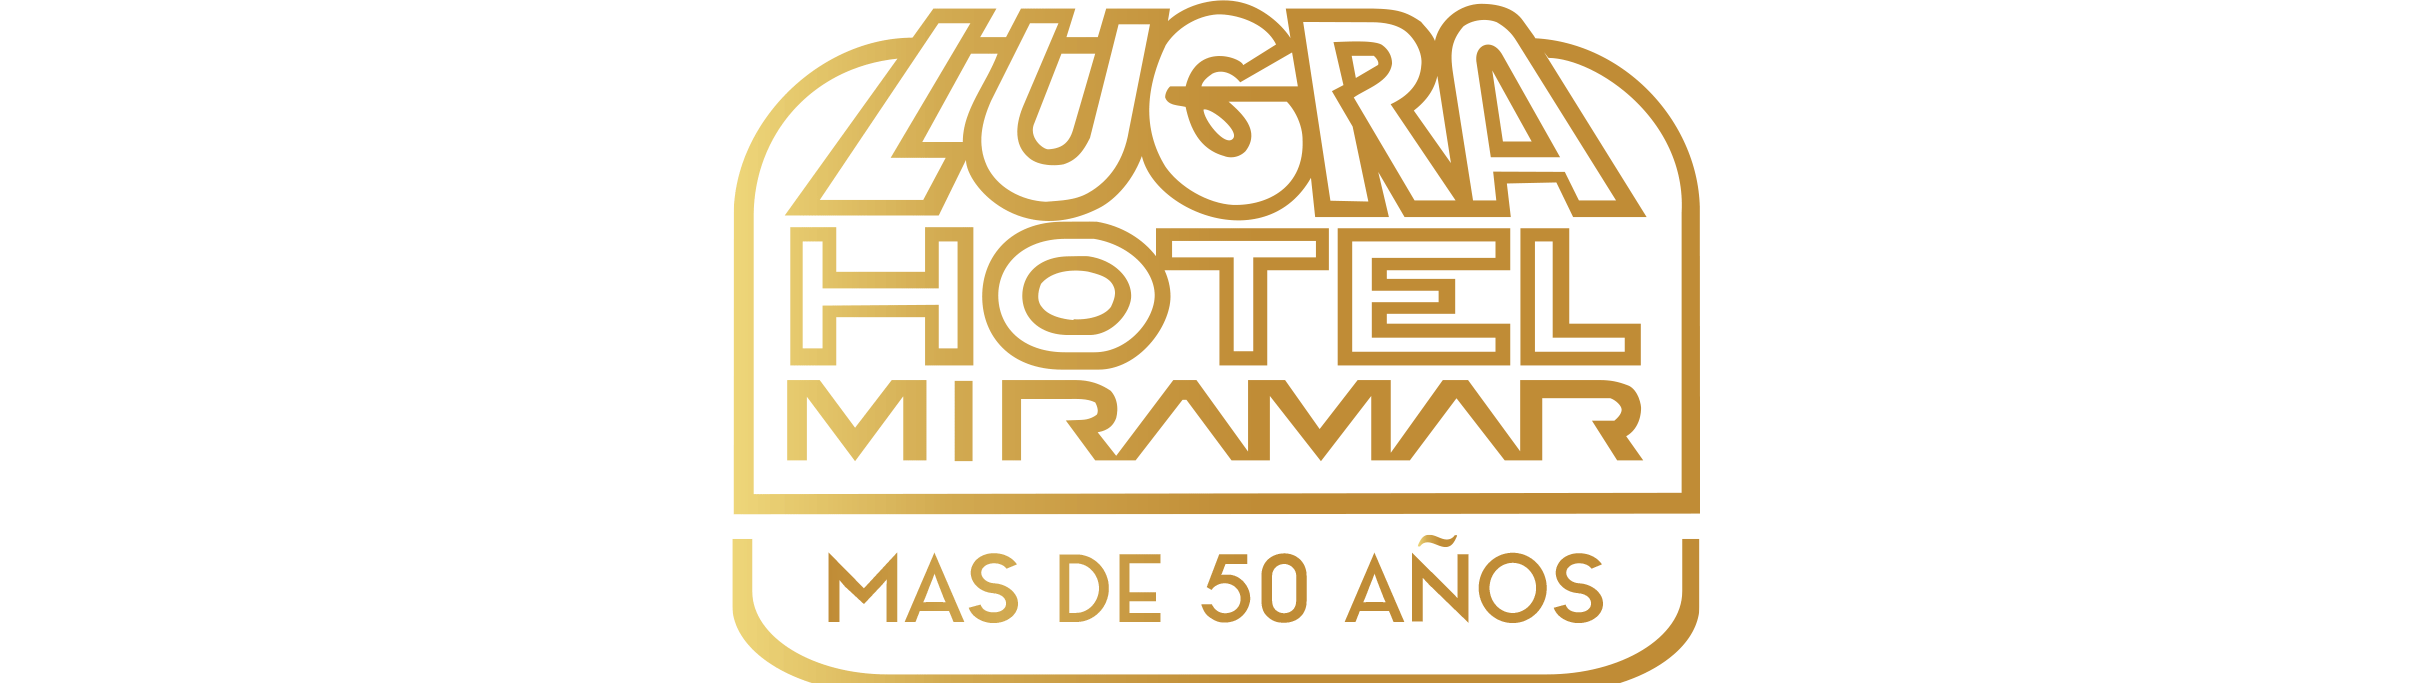 Lugra Hotel en Miramar